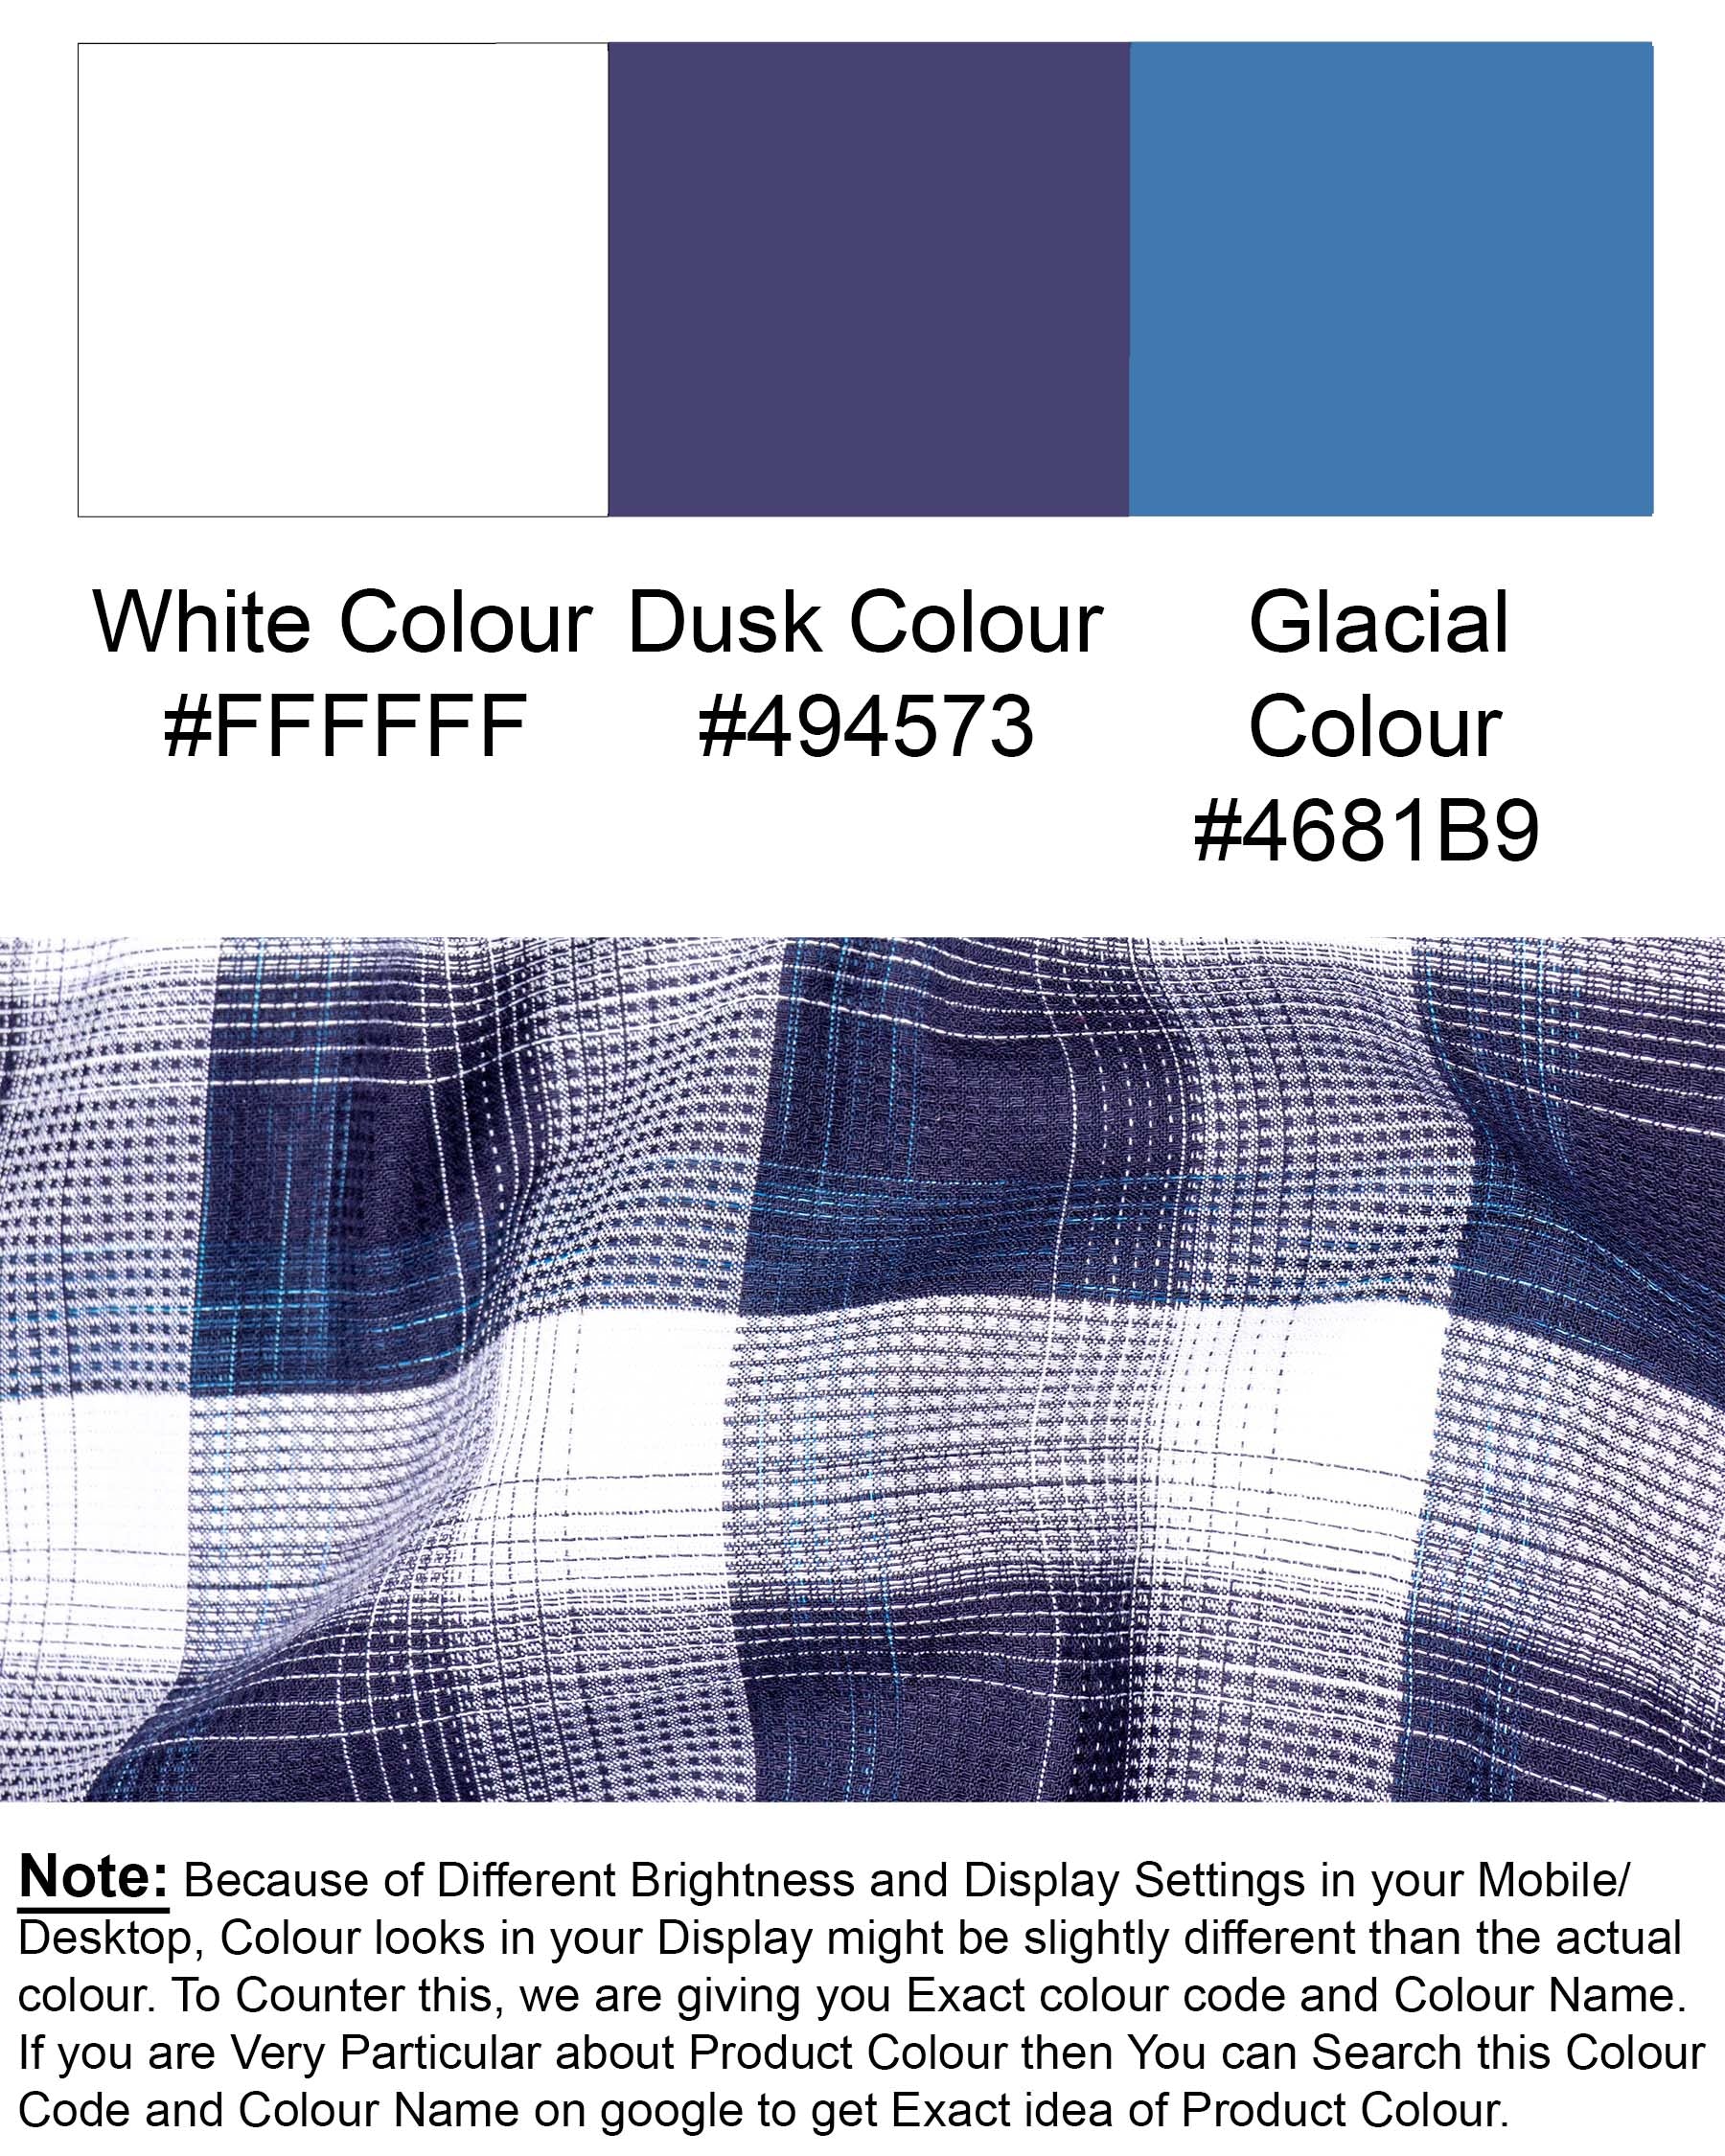 Dusk Blue with white Checkered Dobby Textured Premium Giza Cotton Shirt 7002-BD-BLE-38,7002-BD-BLE-38,7002-BD-BLE-39,7002-BD-BLE-39,7002-BD-BLE-40,7002-BD-BLE-40,7002-BD-BLE-42,7002-BD-BLE-42,7002-BD-BLE-44,7002-BD-BLE-44,7002-BD-BLE-46,7002-BD-BLE-46,7002-BD-BLE-48,7002-BD-BLE-48,7002-BD-BLE-50,7002-BD-BLE-50,7002-BD-BLE-52,7002-BD-BLE-52